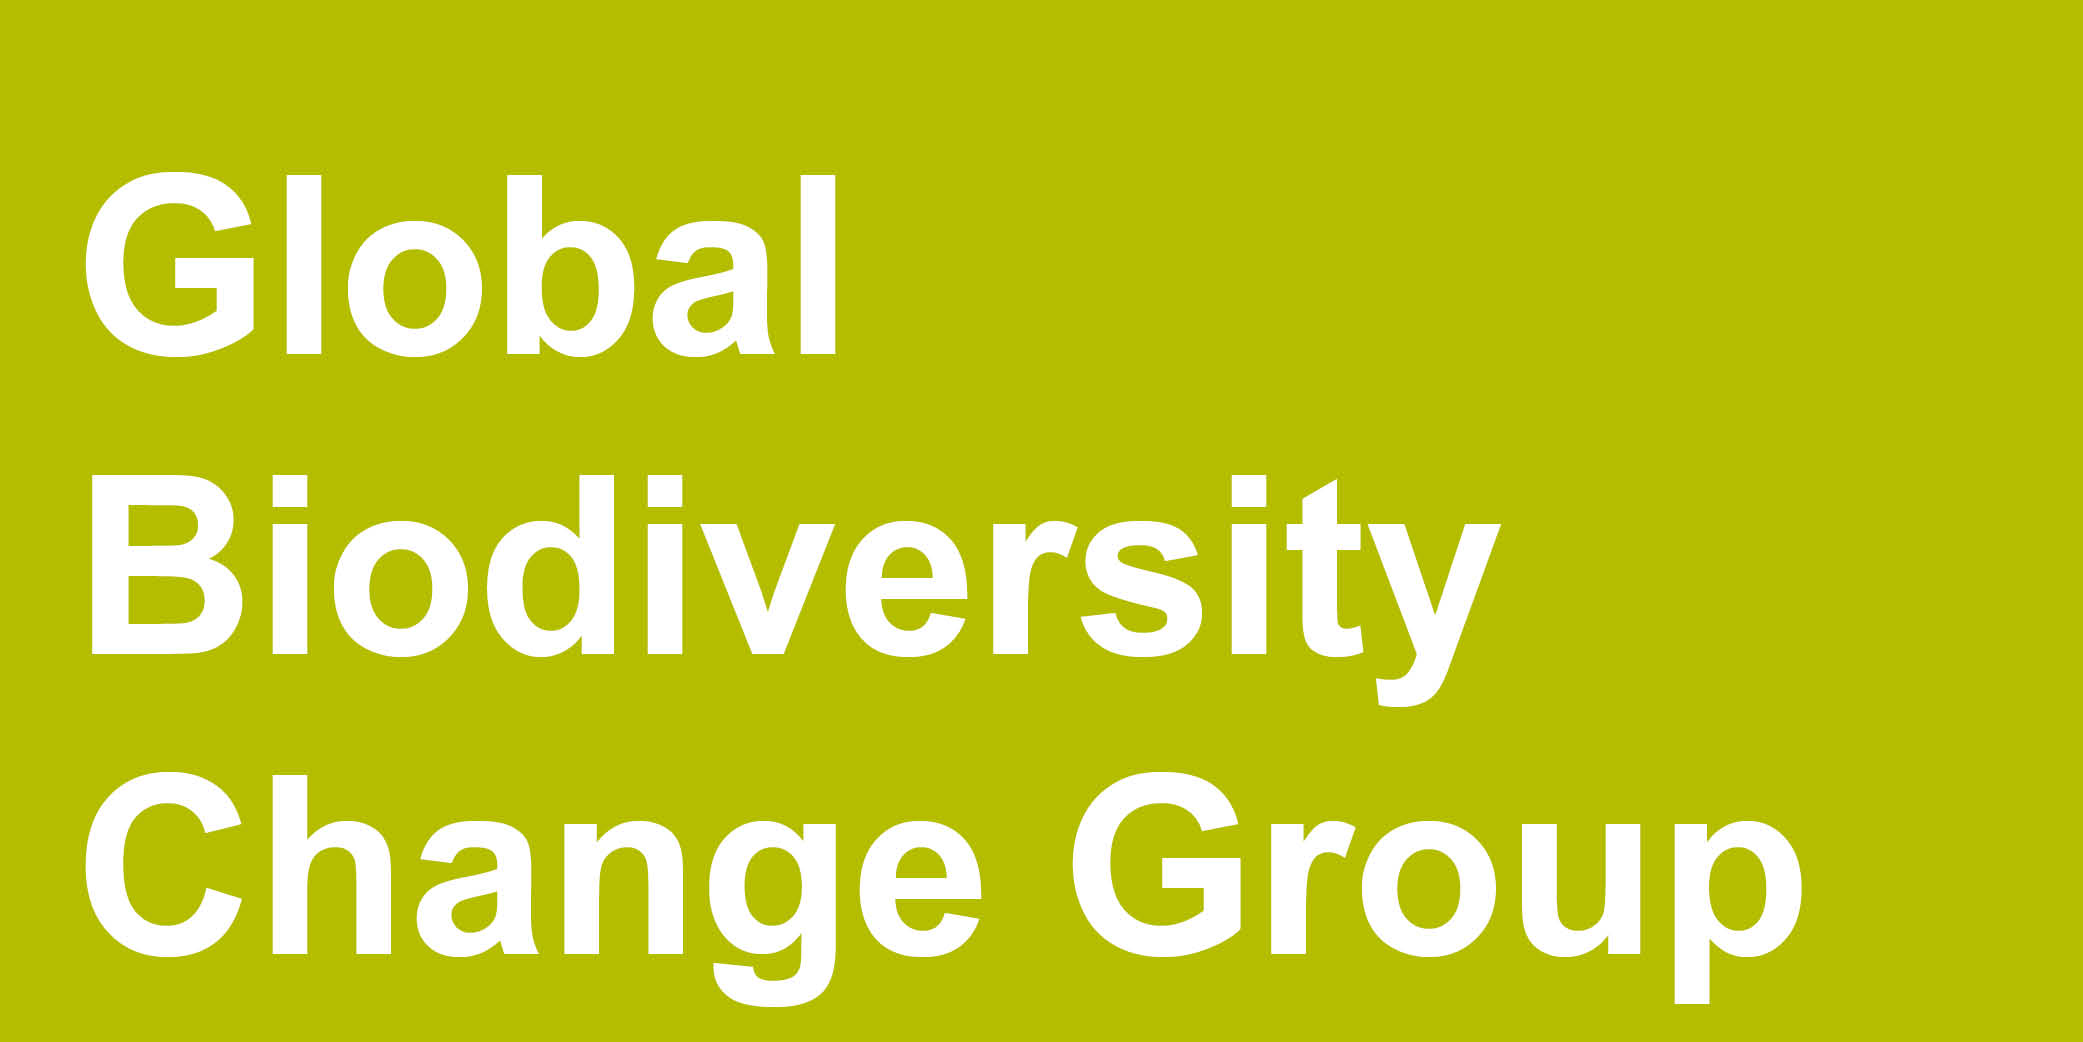 Global Biodiversity Change Group